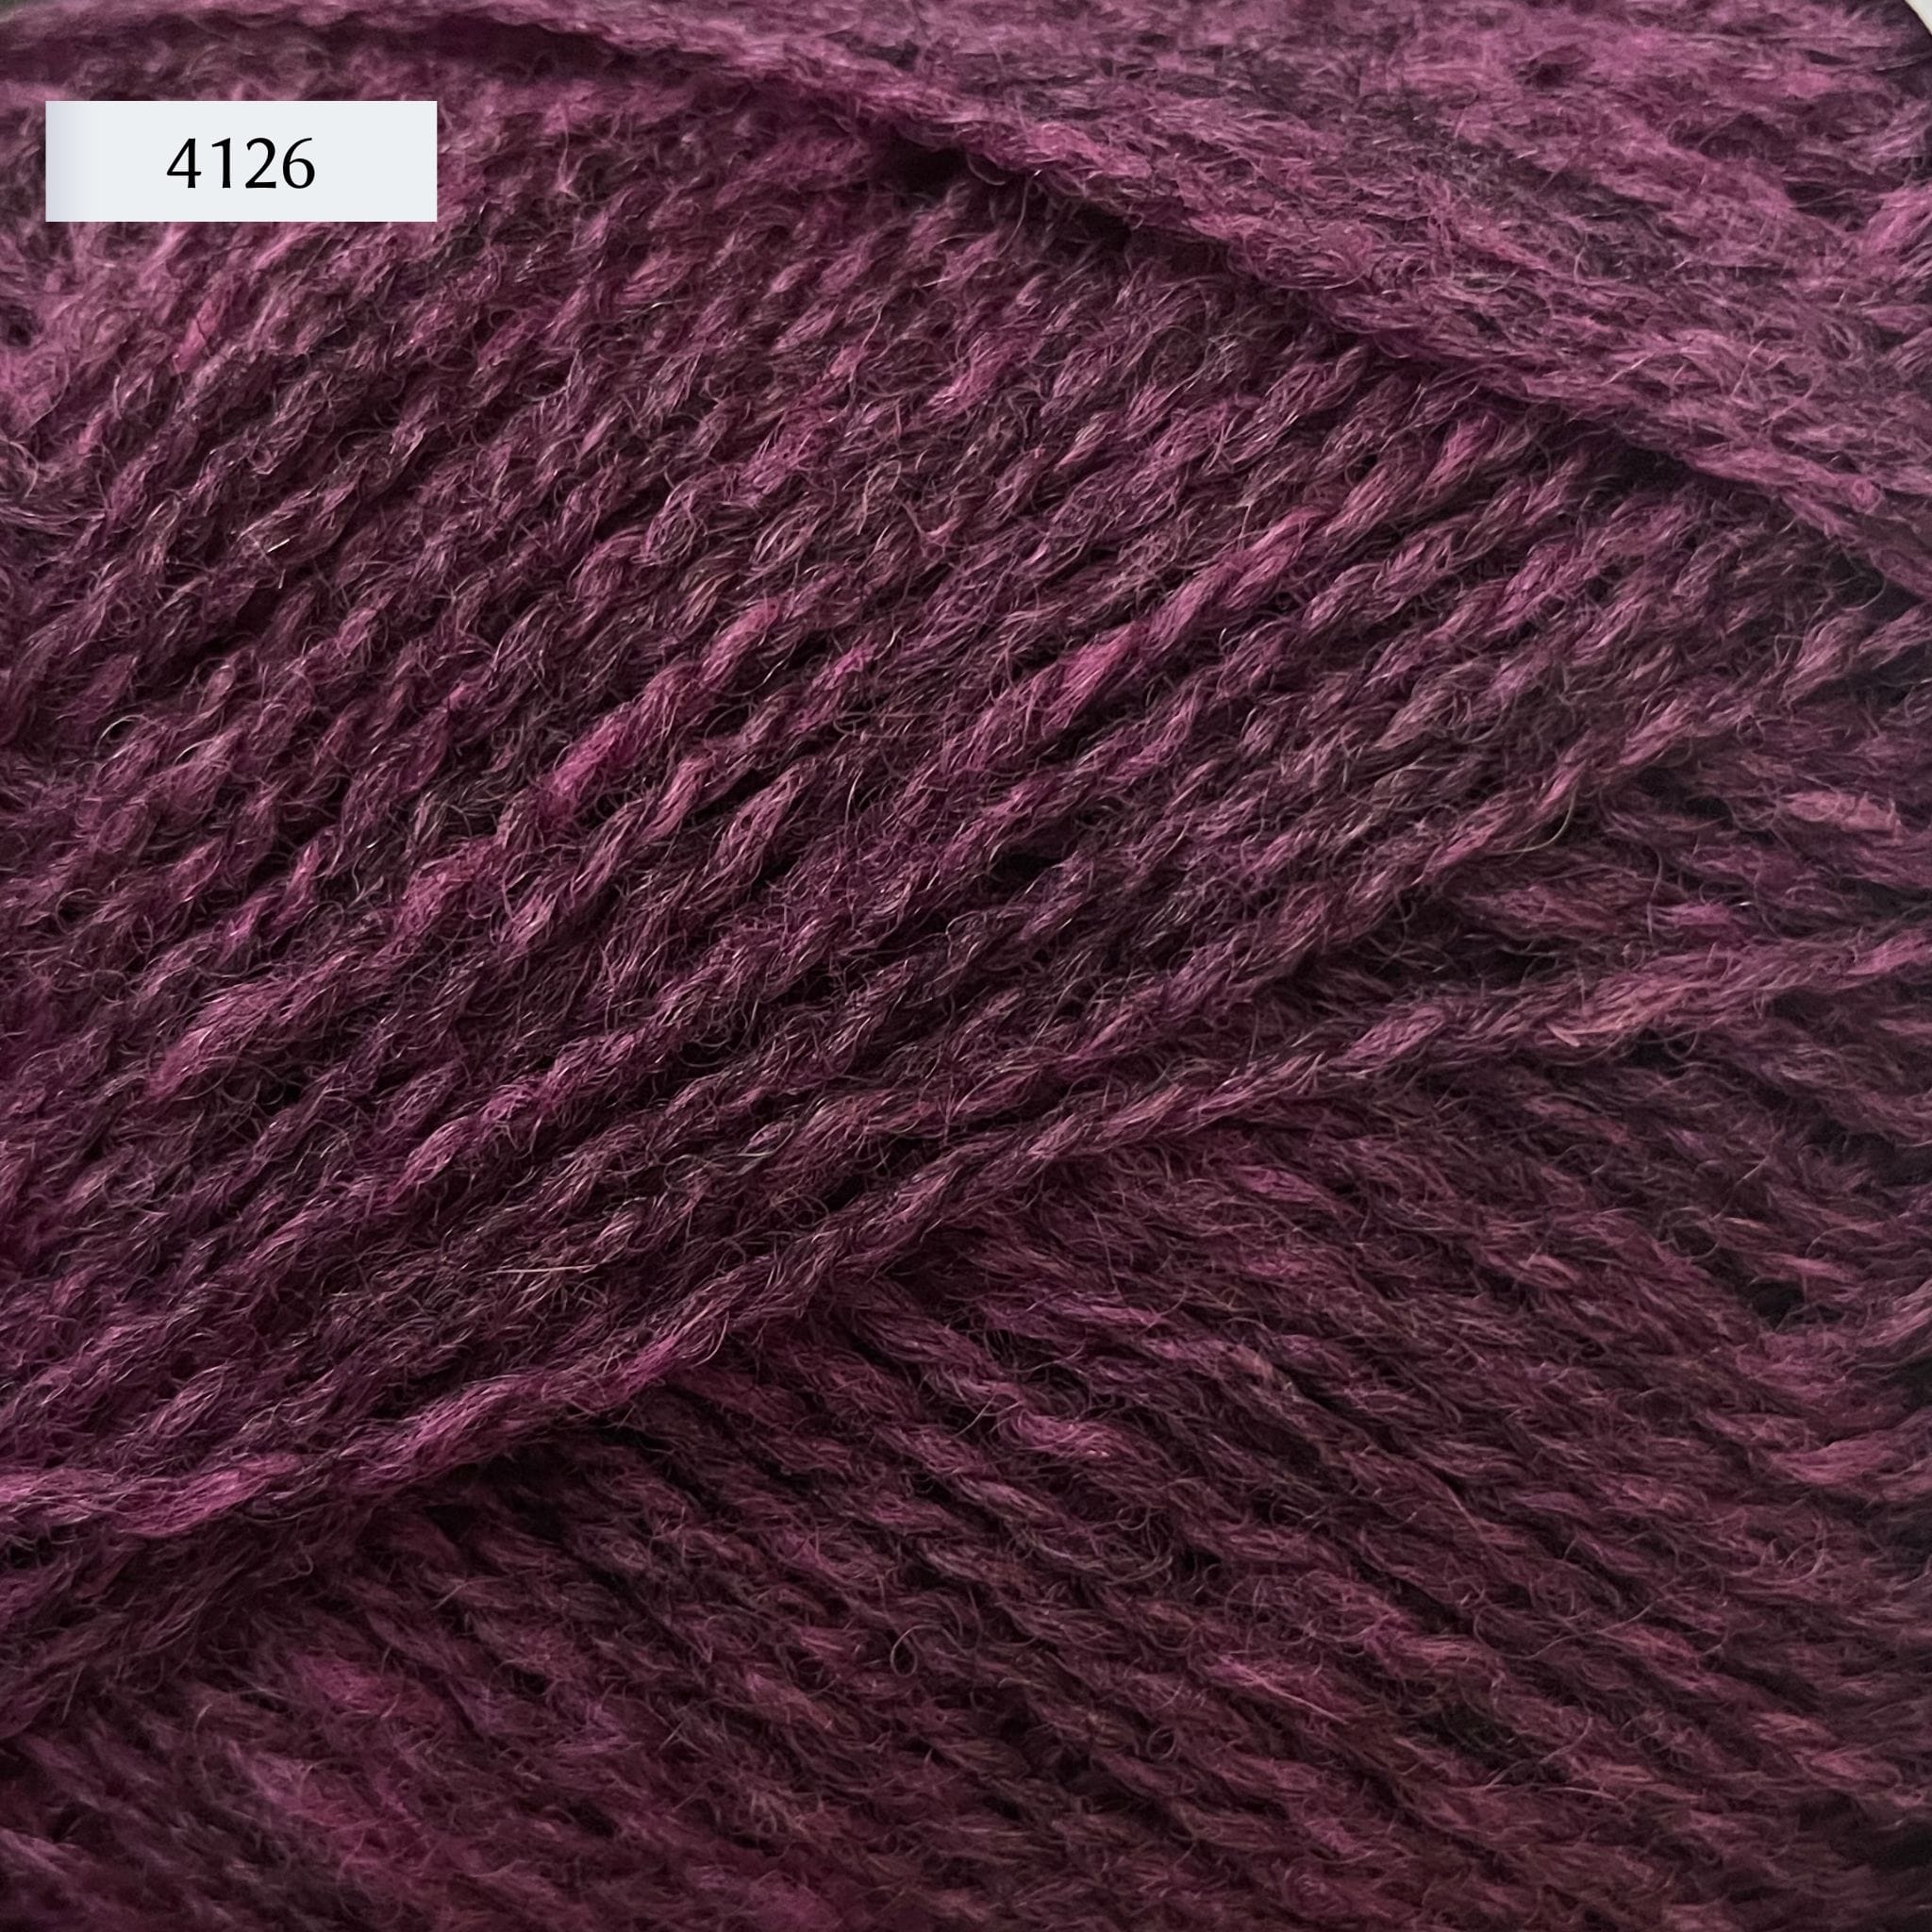 Rauma Finullgarn, a fingering/sport weight yarn, in color 4126, a heathered plum purple